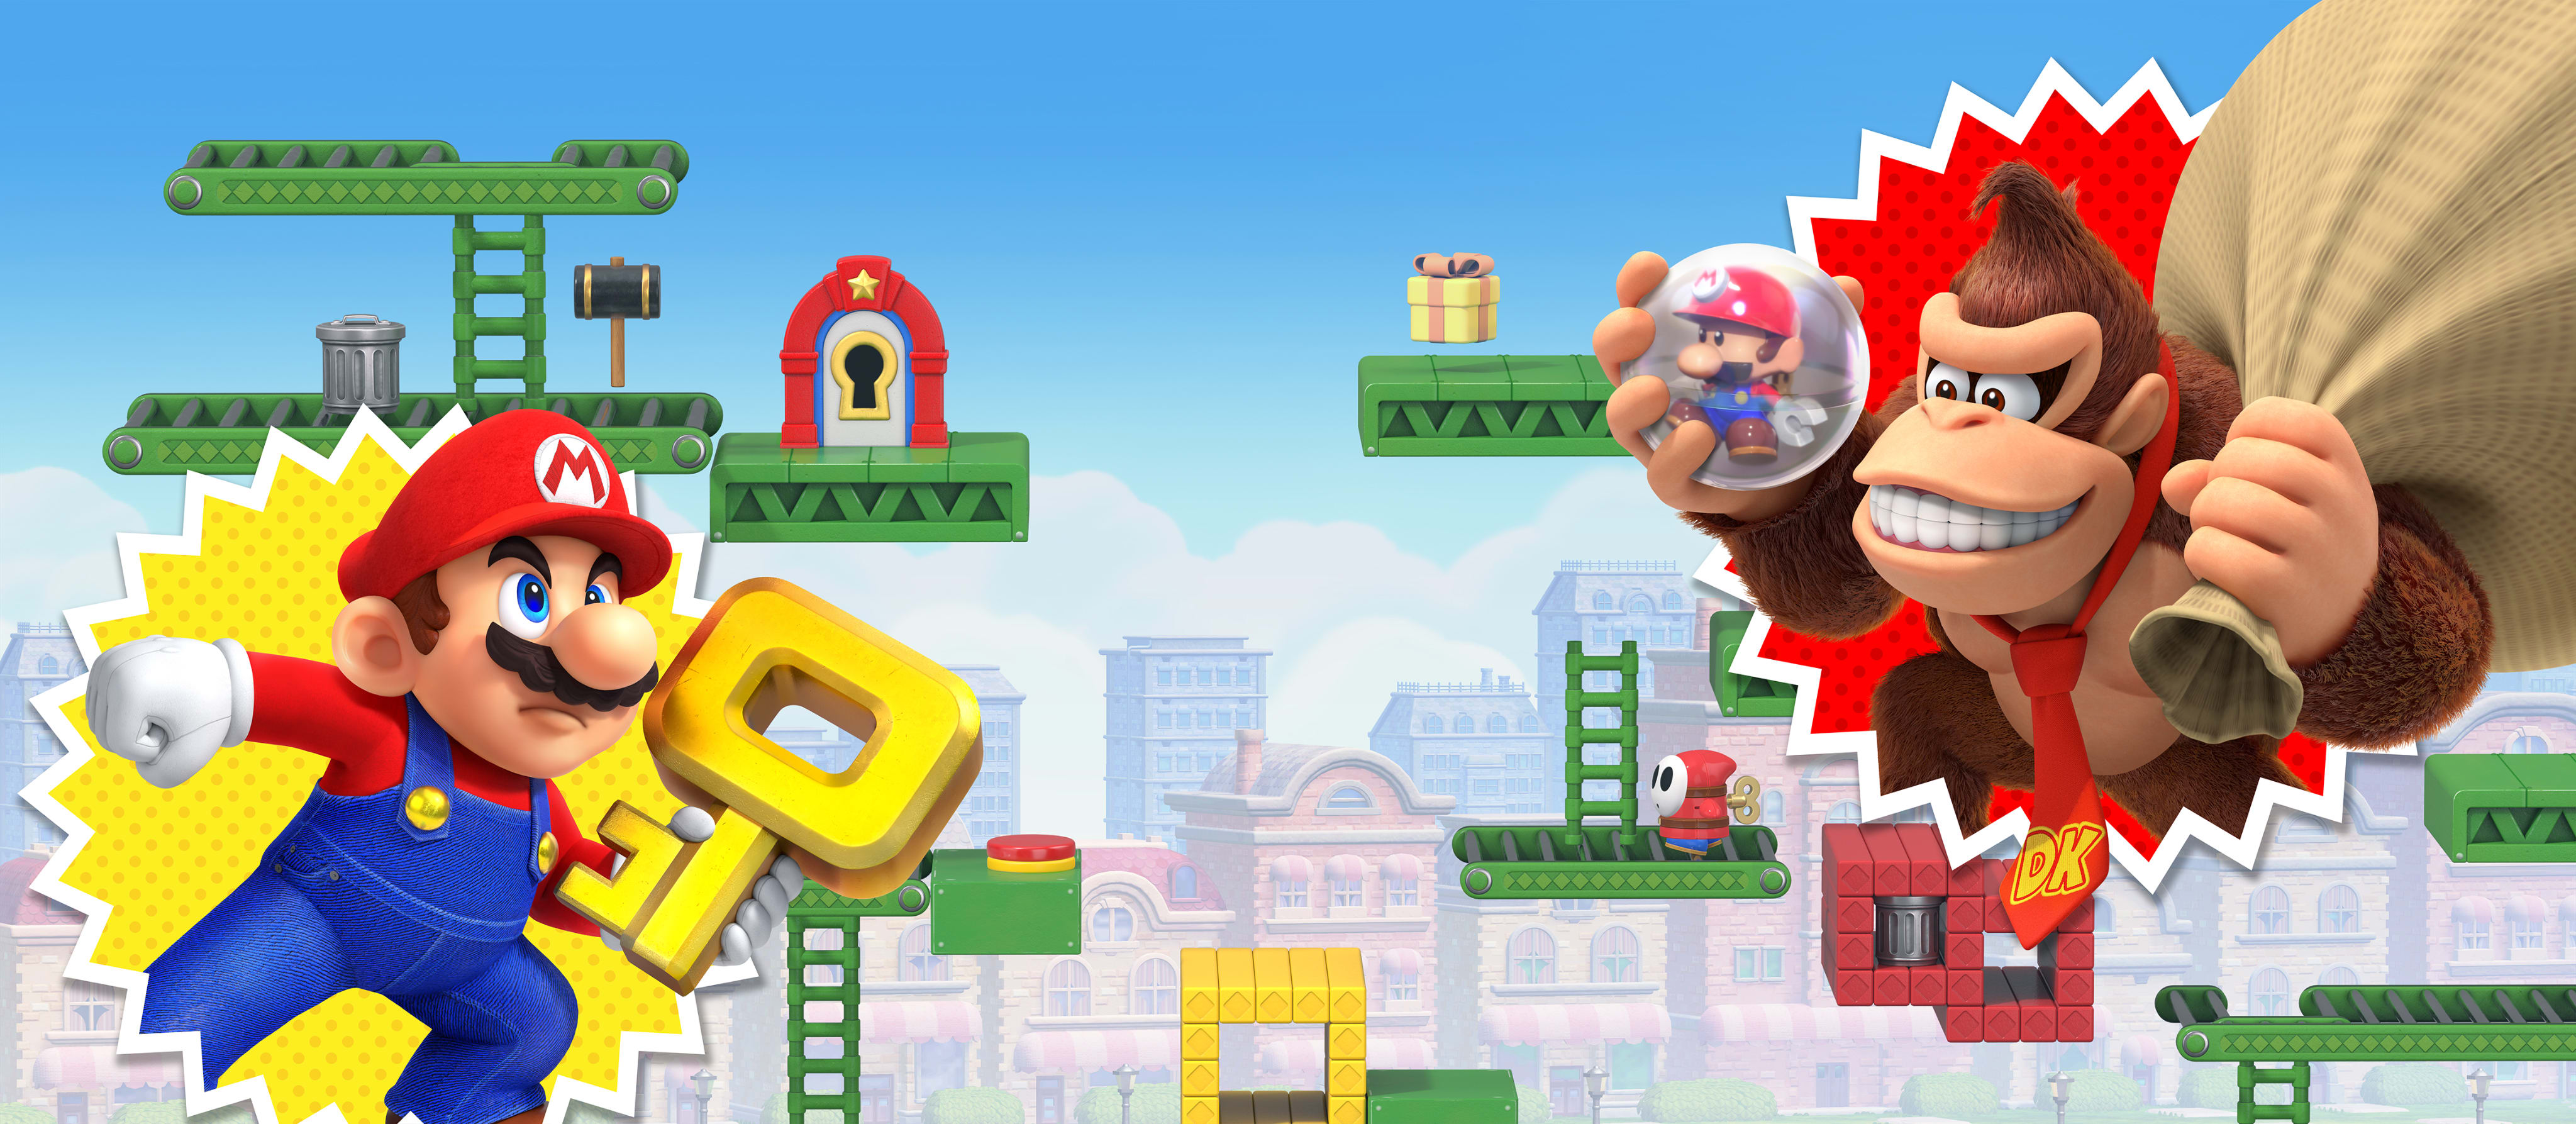 Mario Vs Donkey Kong Returns to the Nintendo Switch